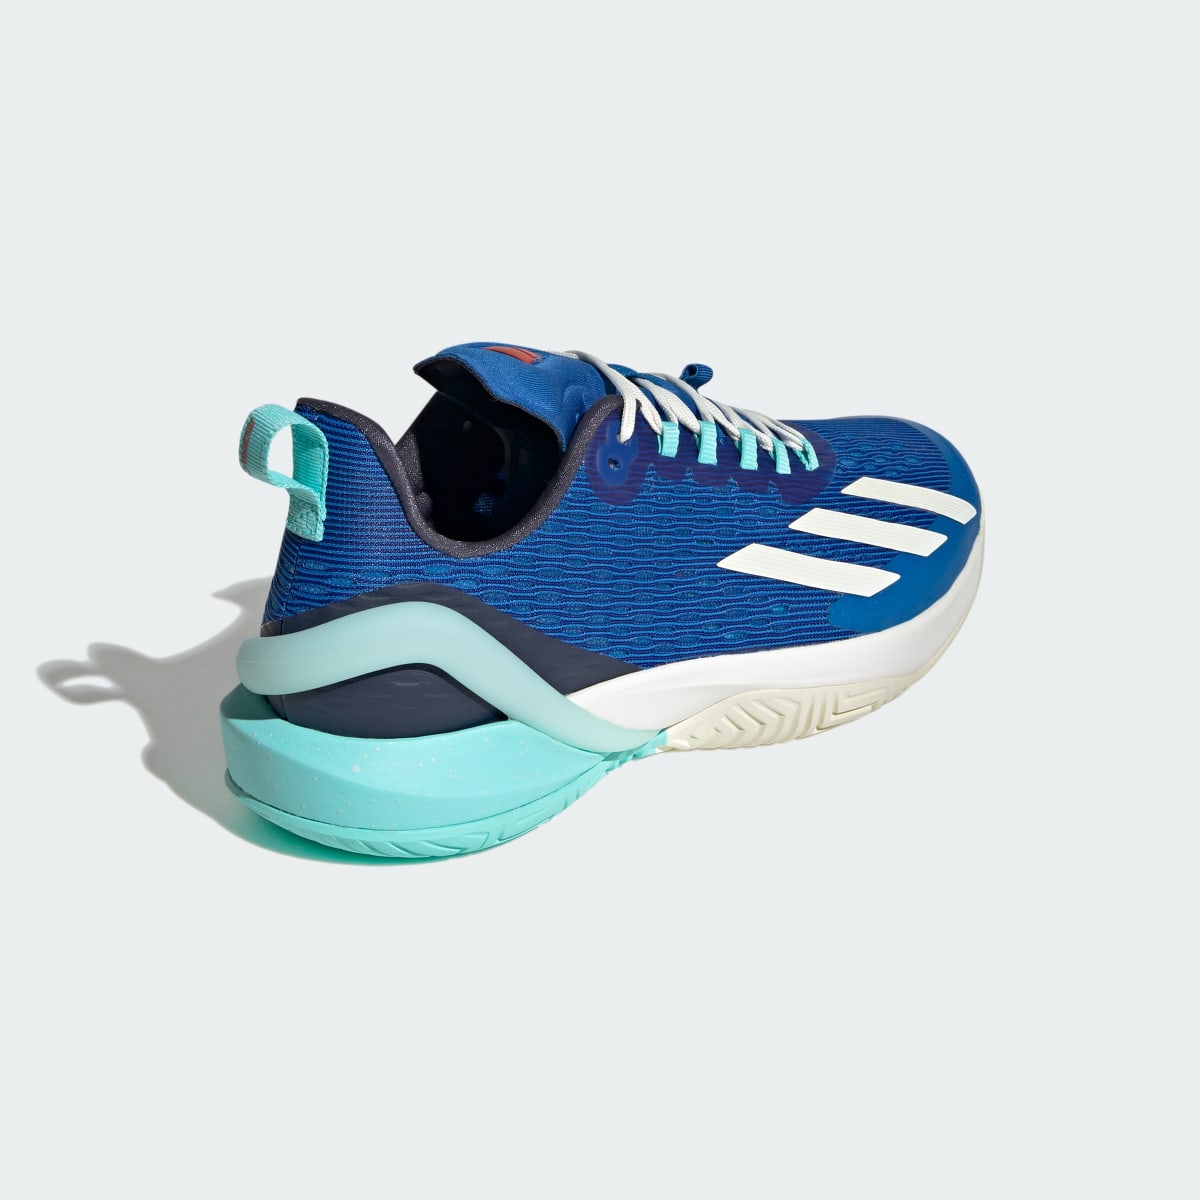 Adidas Chaussure de tennis adizero Cybersonic. 6